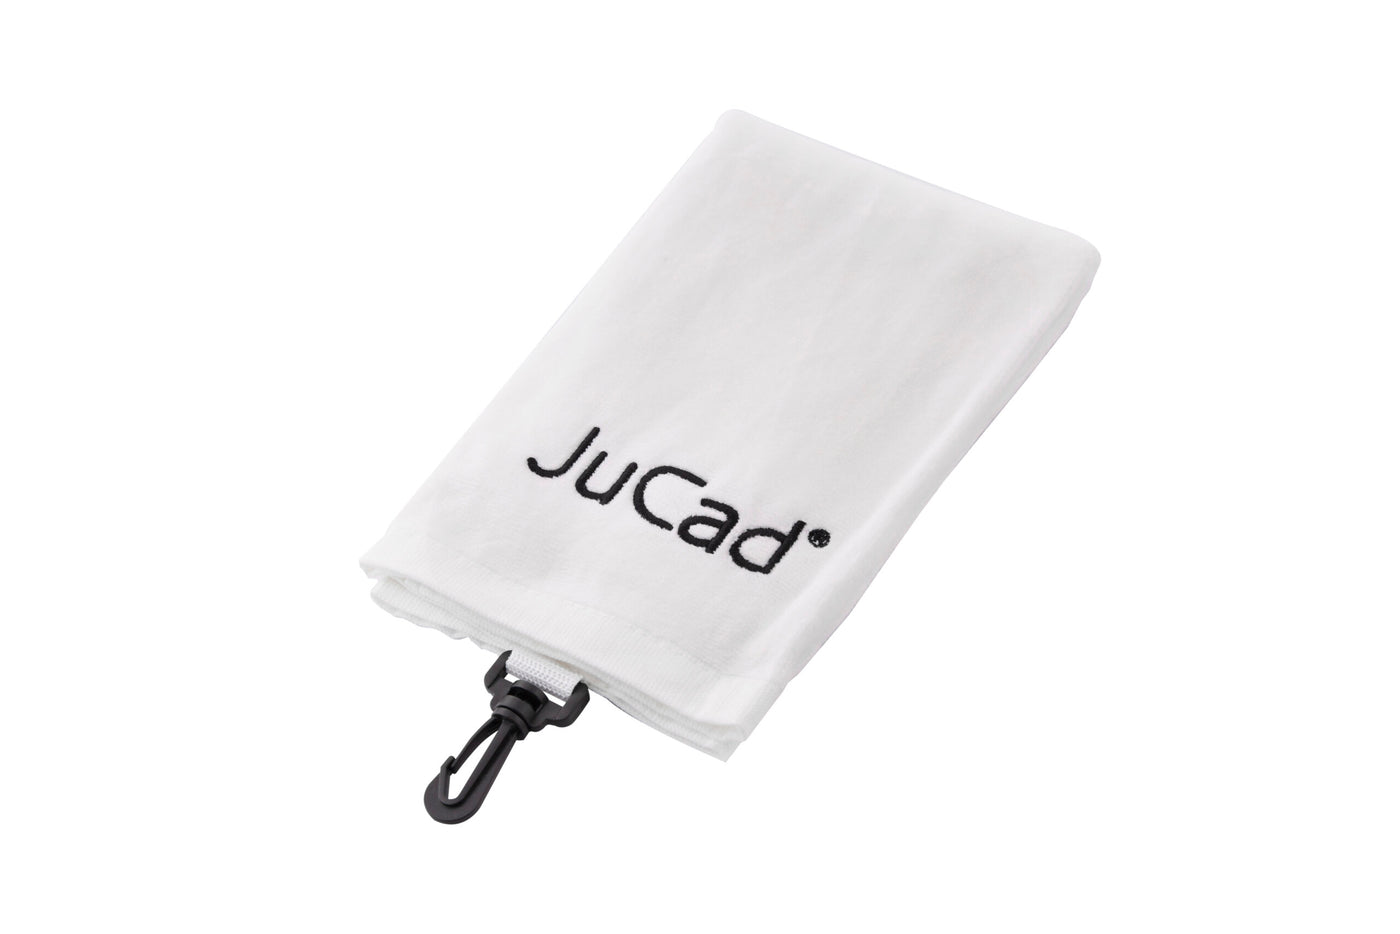 JuCad functional bat cloth